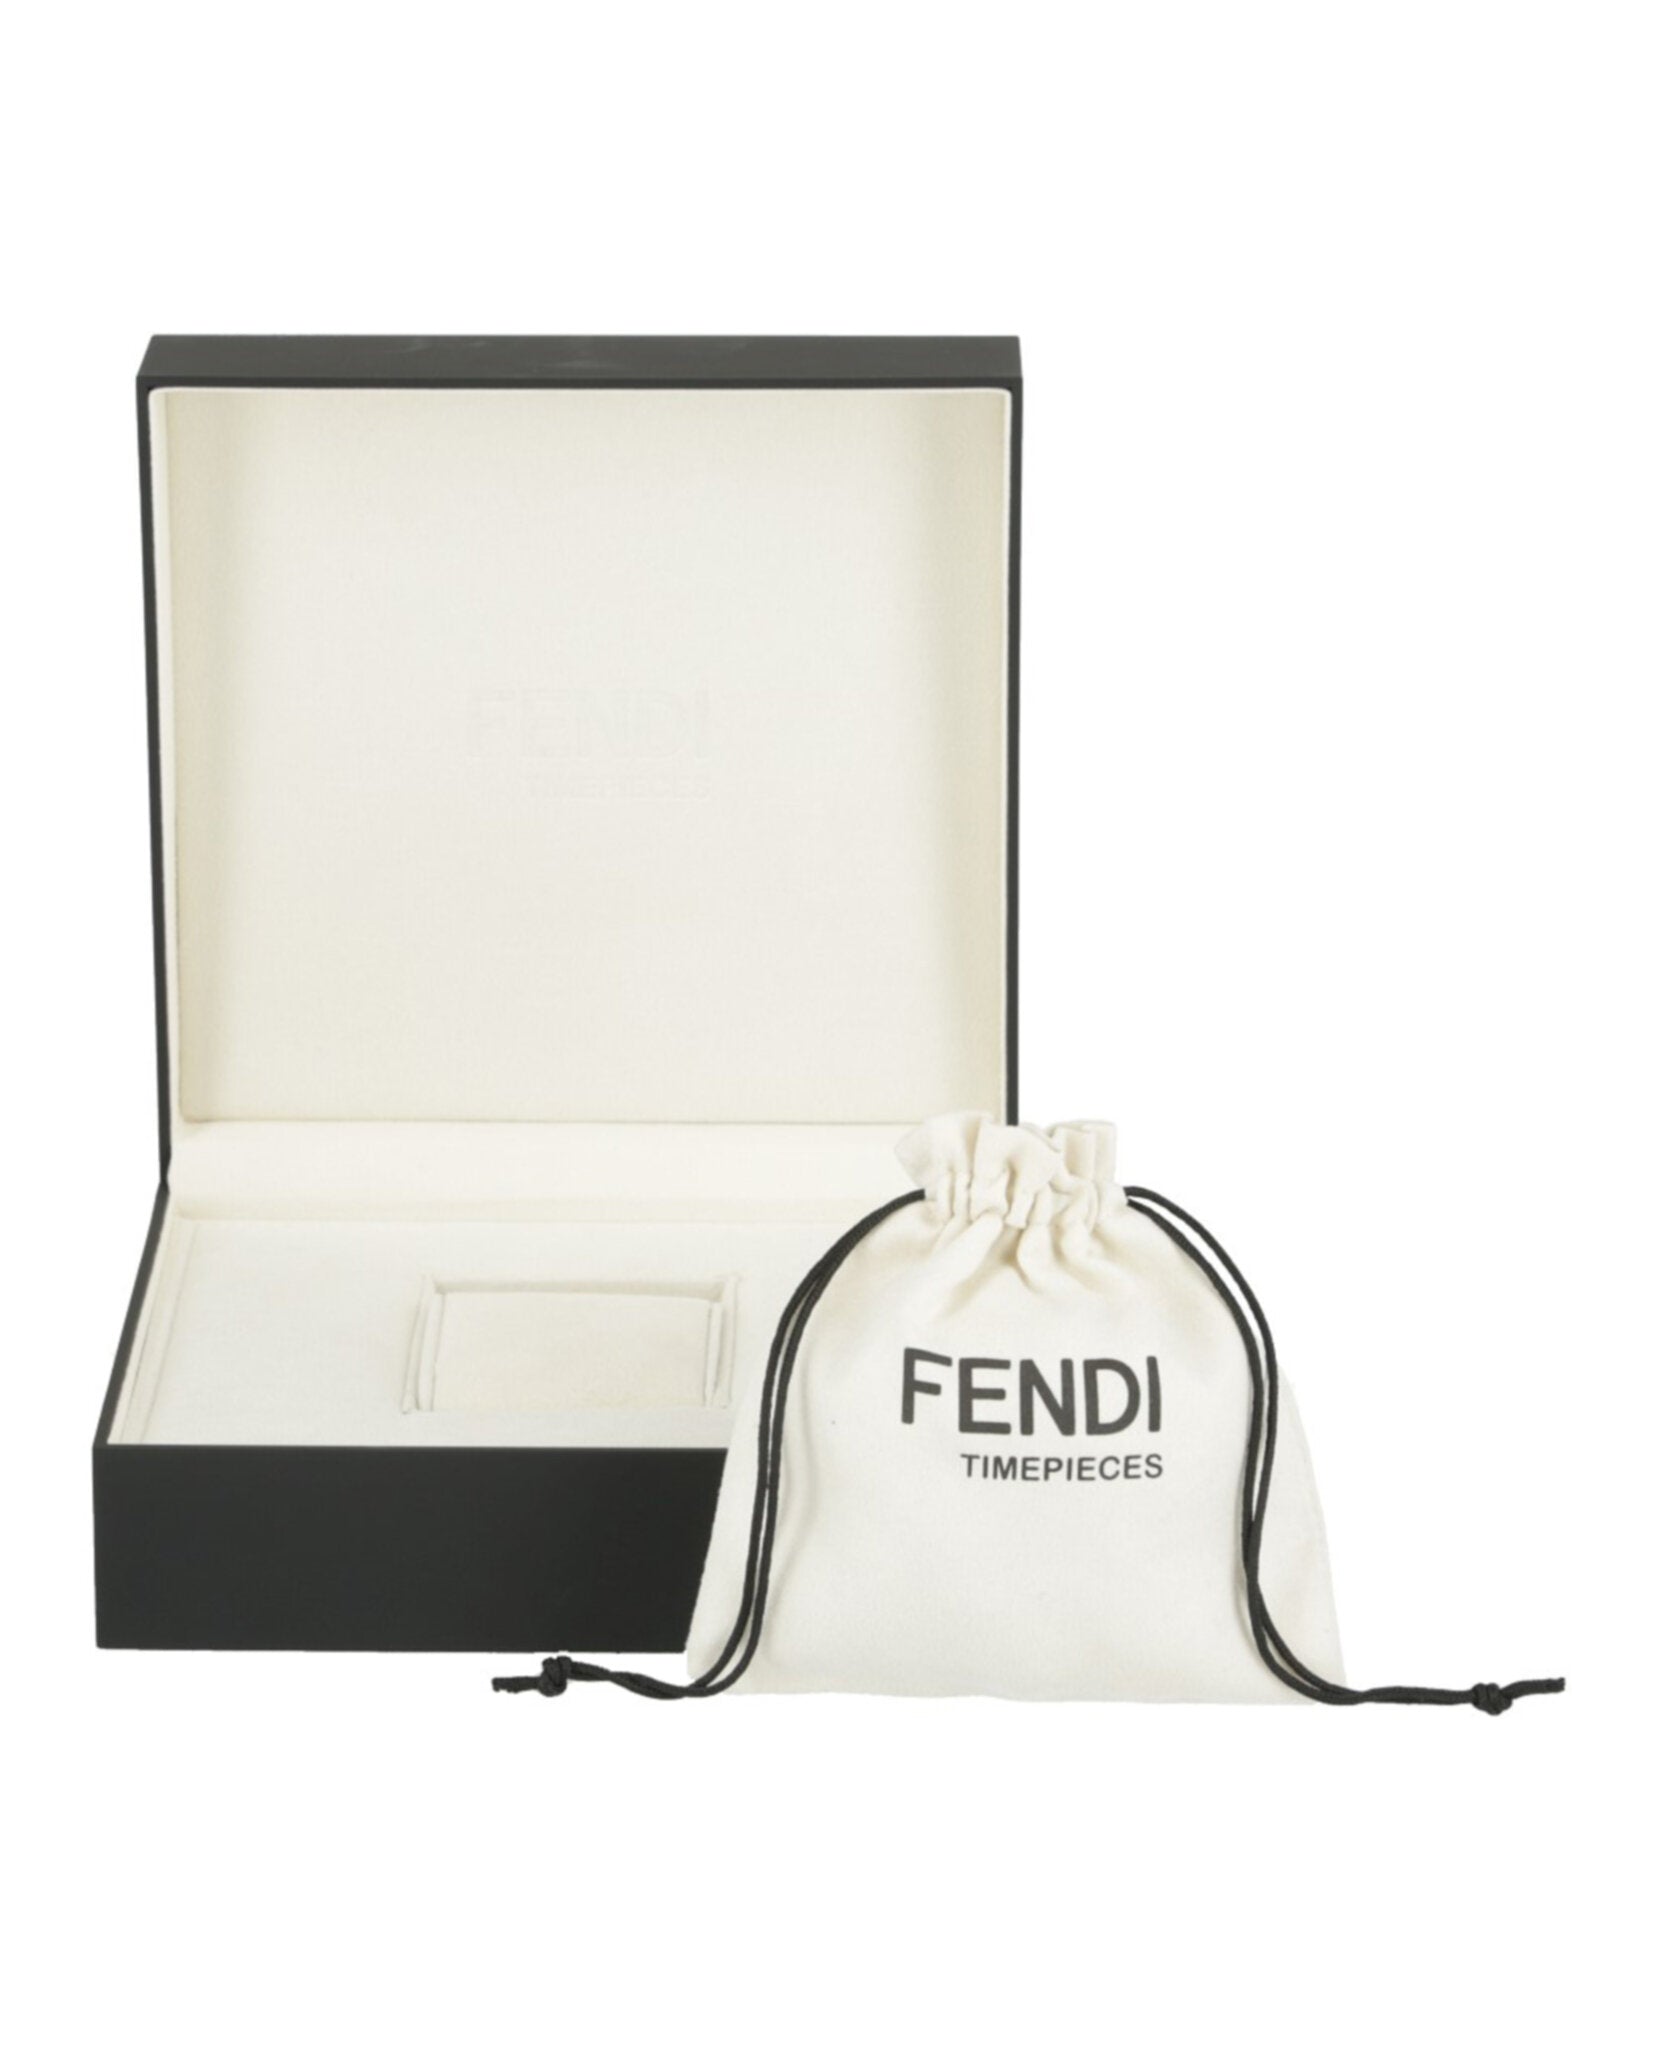 Forever Fendi Square Diamond Watch